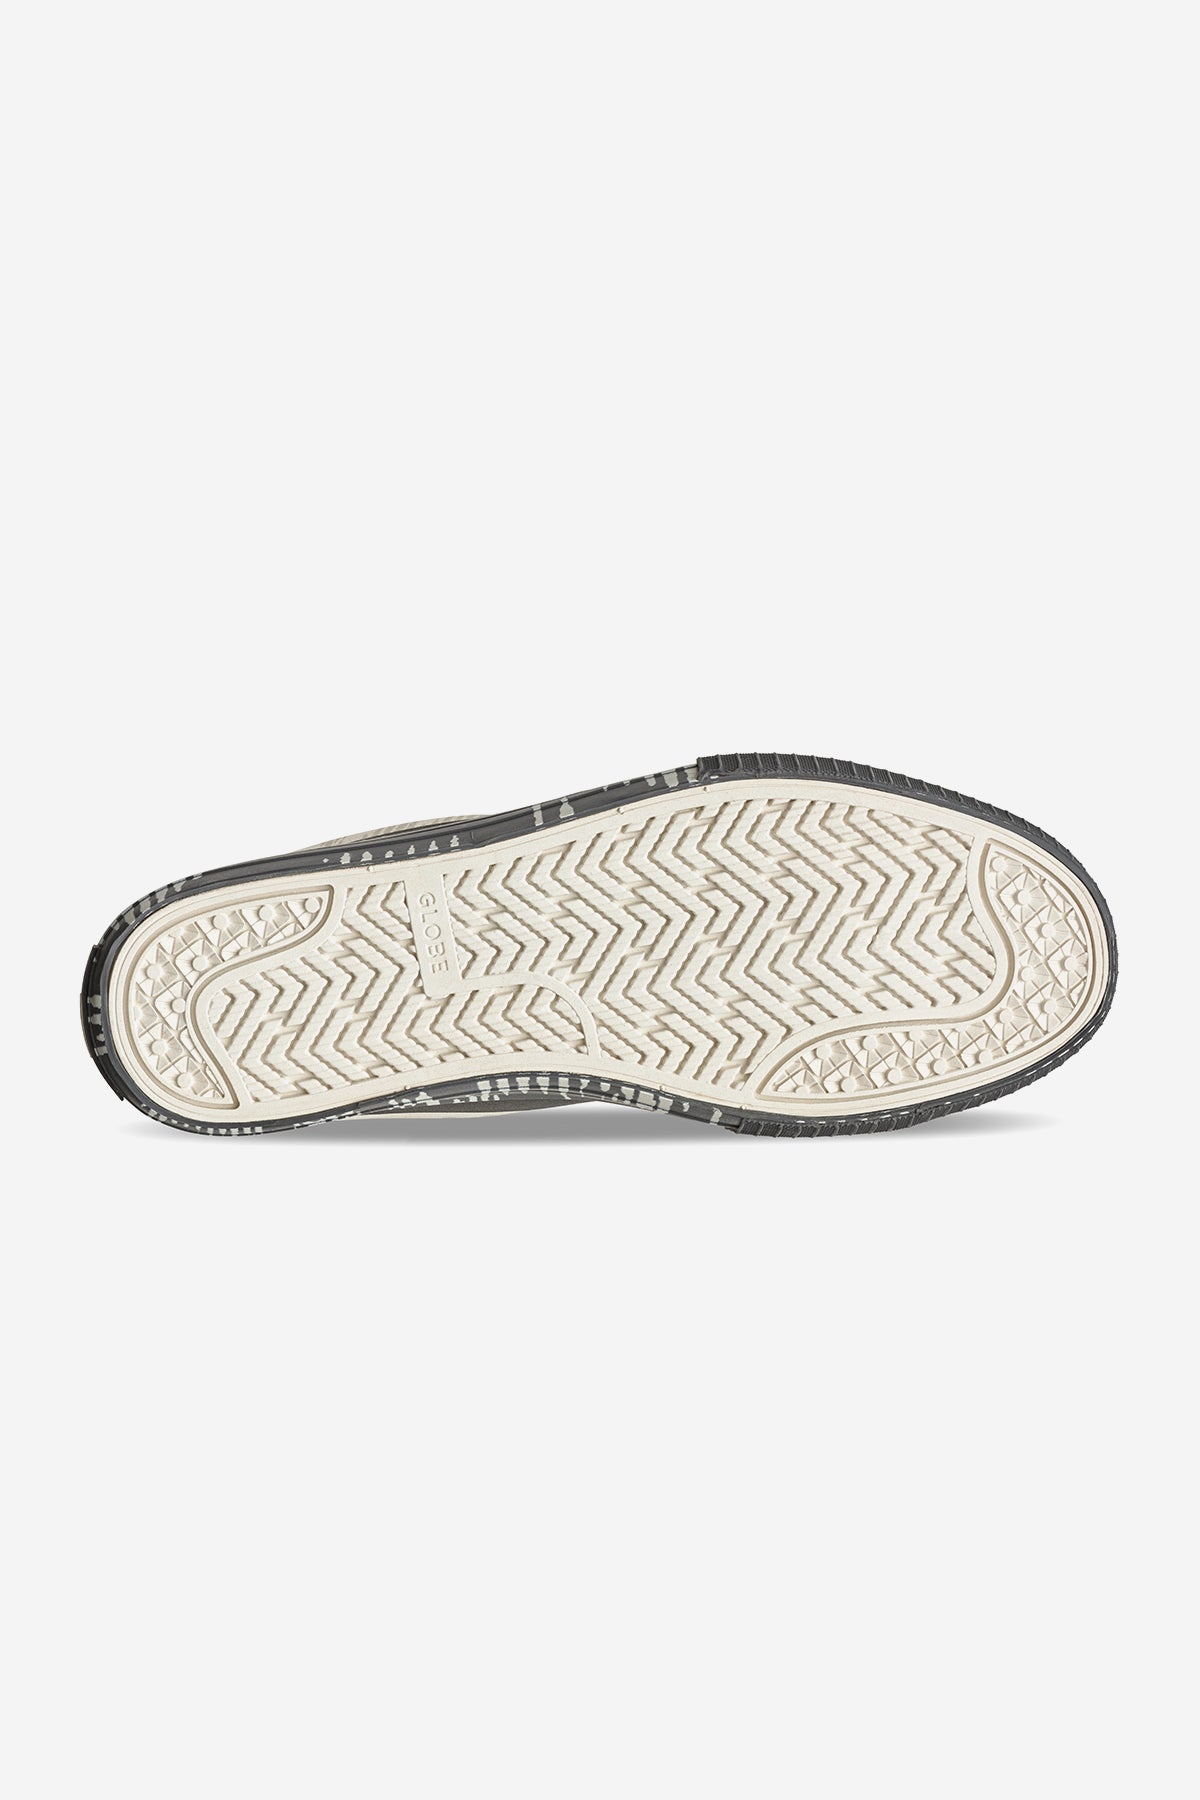 gillette cream graphite former skateboard shoes